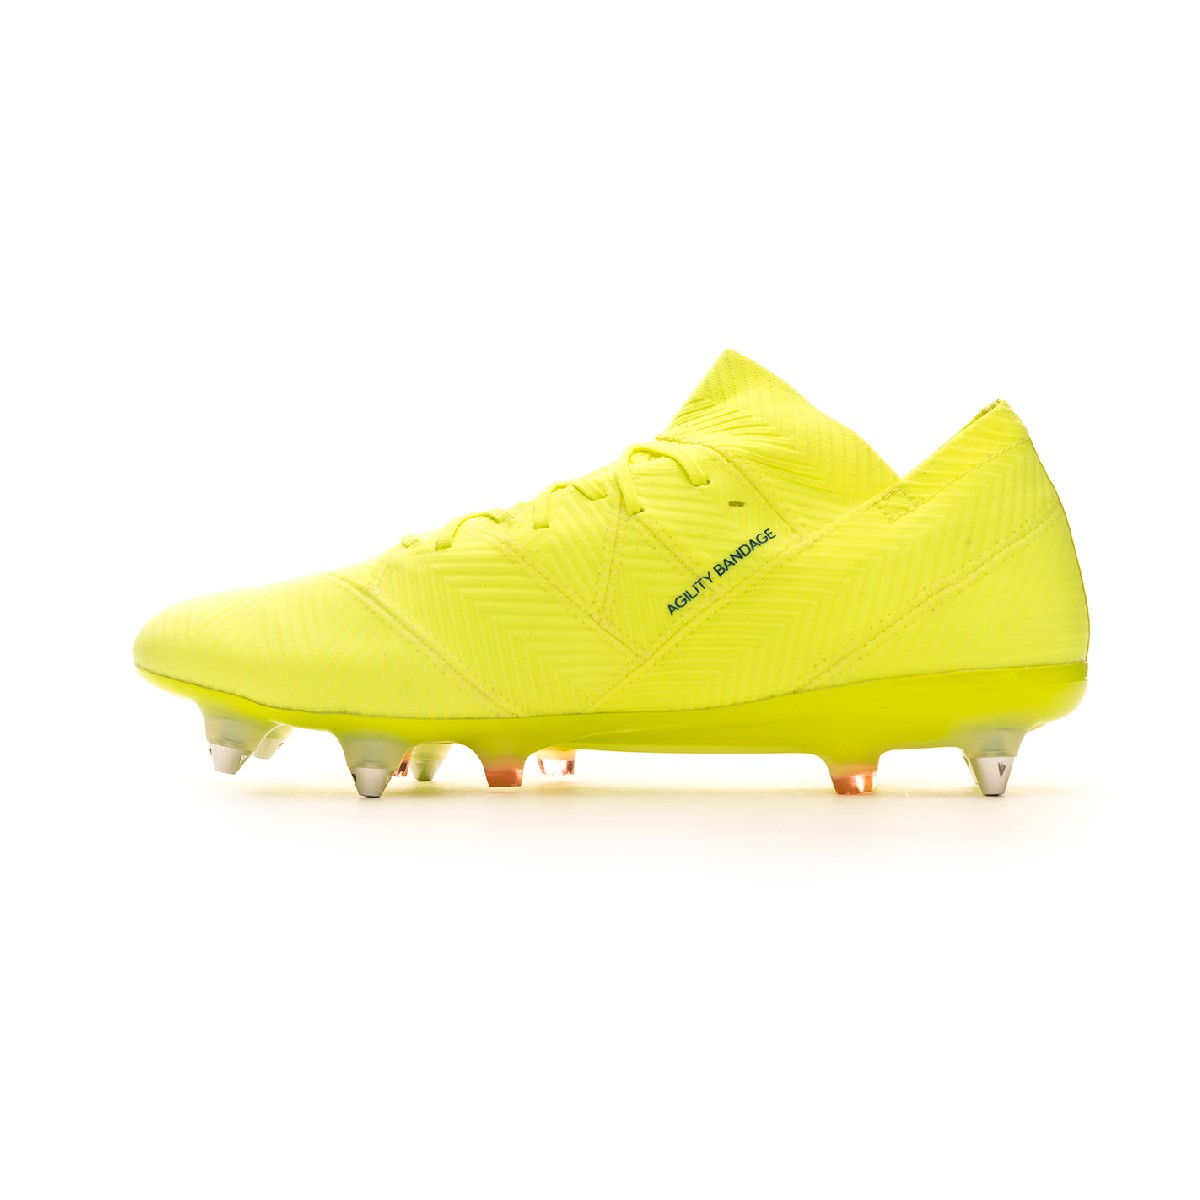 Zapatos de fútbol adidas Nemeziz 18.1 SG Solar yellow-Football blue-Active  red - Tienda de fútbol Fútbol Emotion